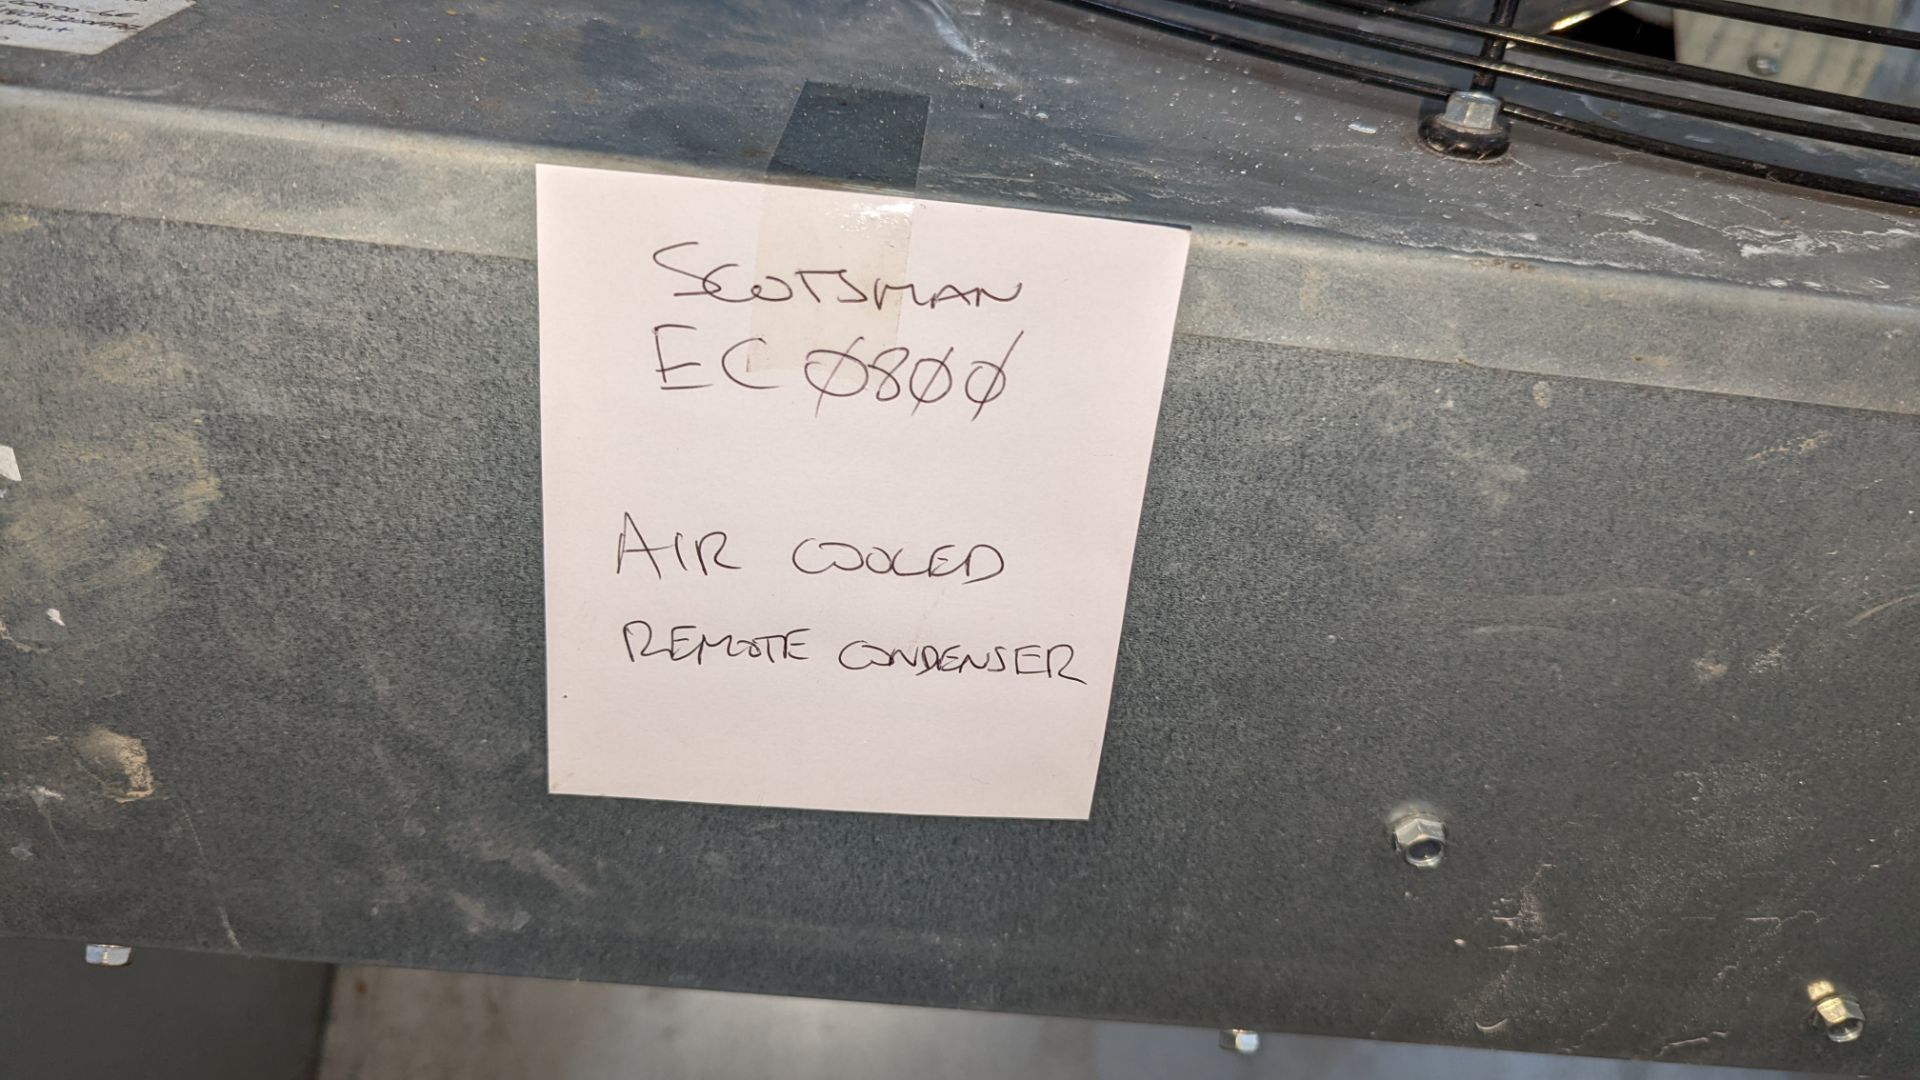 Scotsman EC0800 air cooled remote condenser - Image 4 of 7